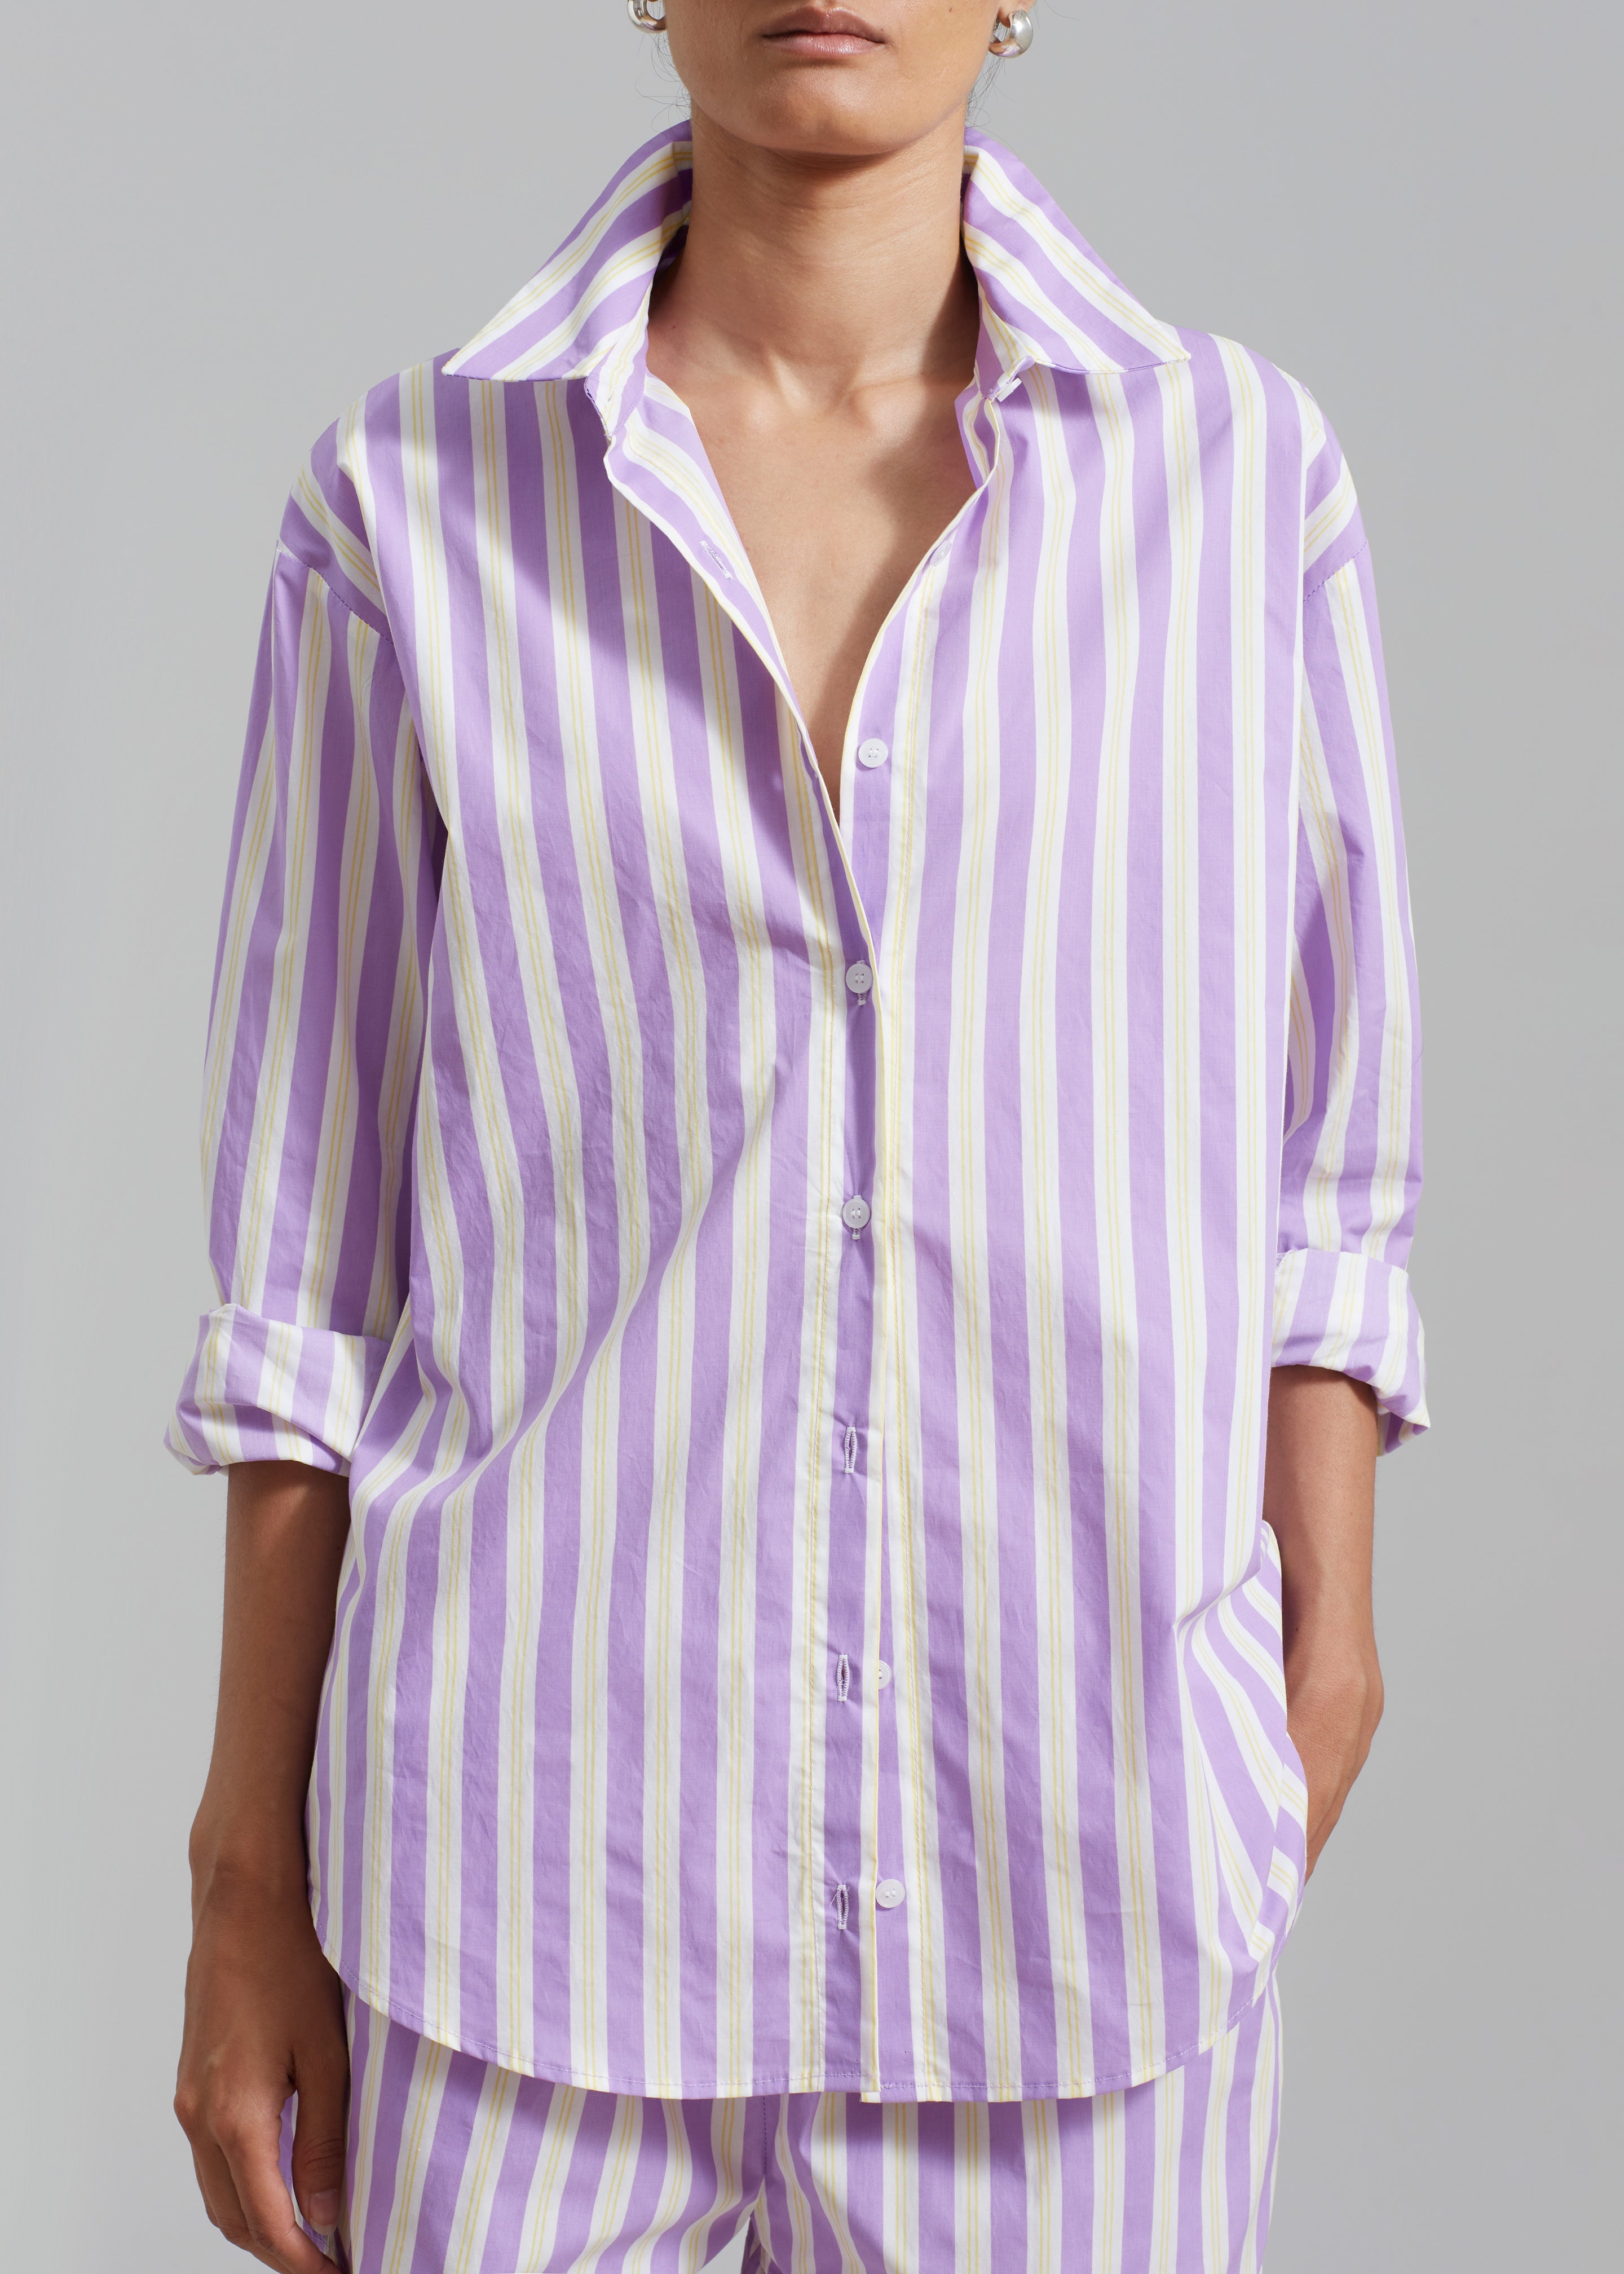 Juno Cotton Shirt - Violet Stripe - 4